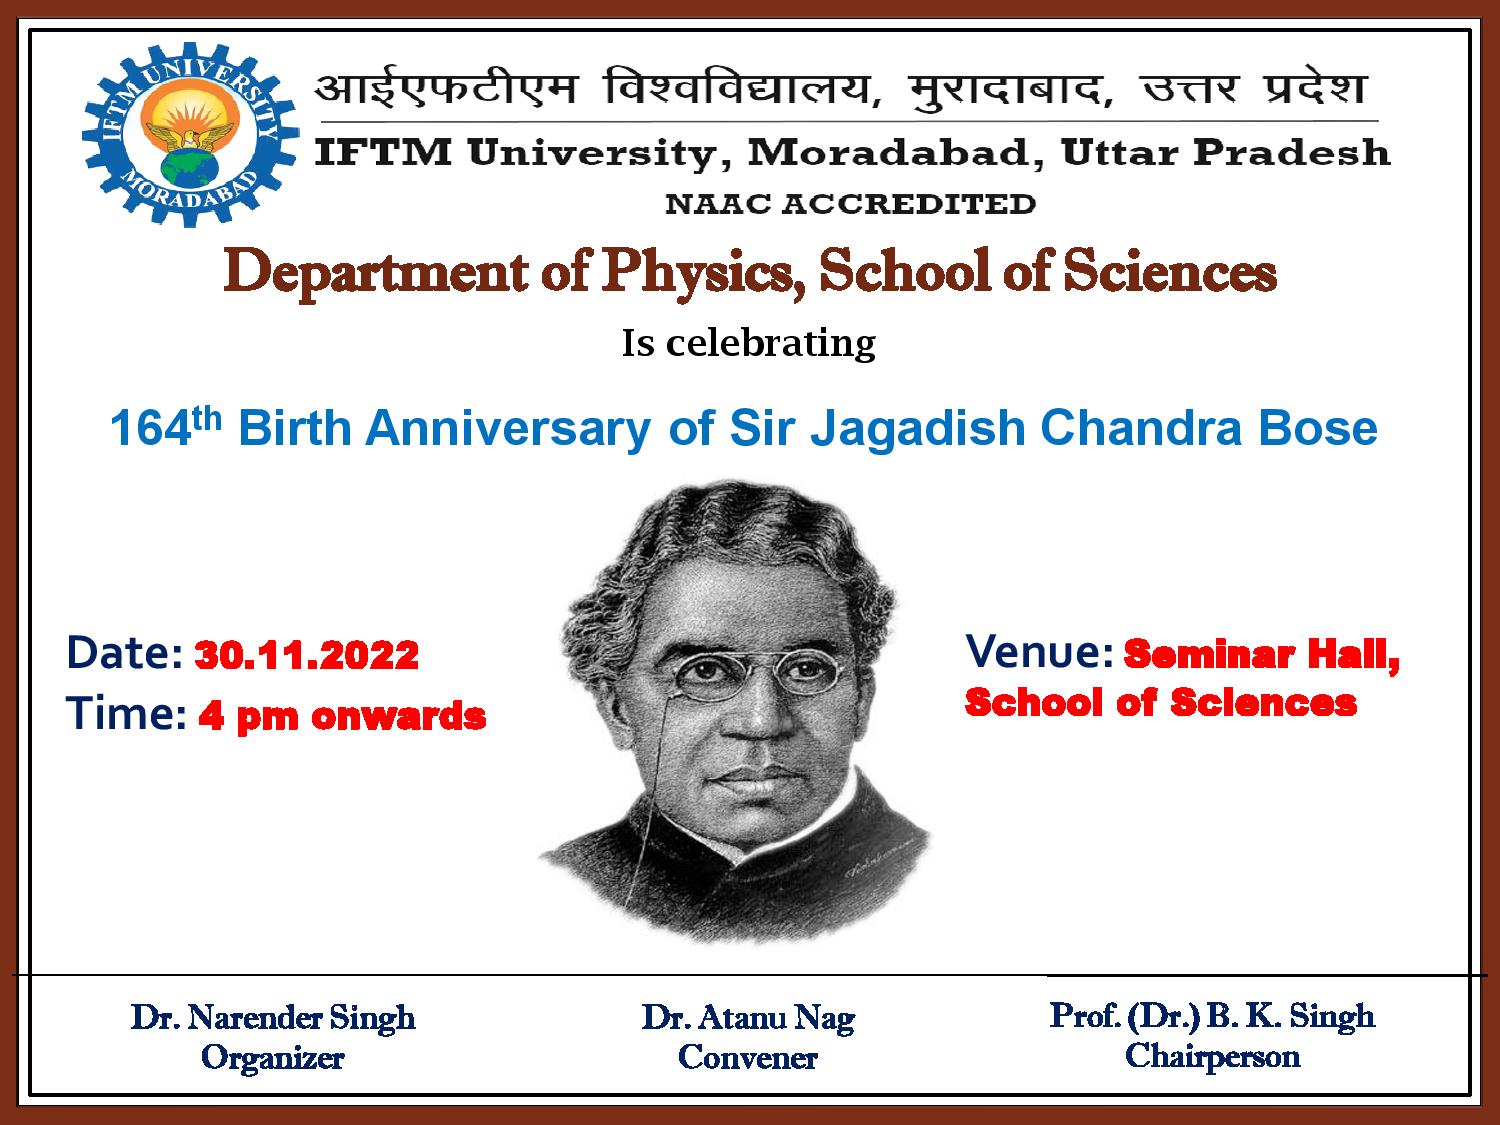 Celebrating 164th Birth Anniversary of Sir Jagadish Chandra Bose